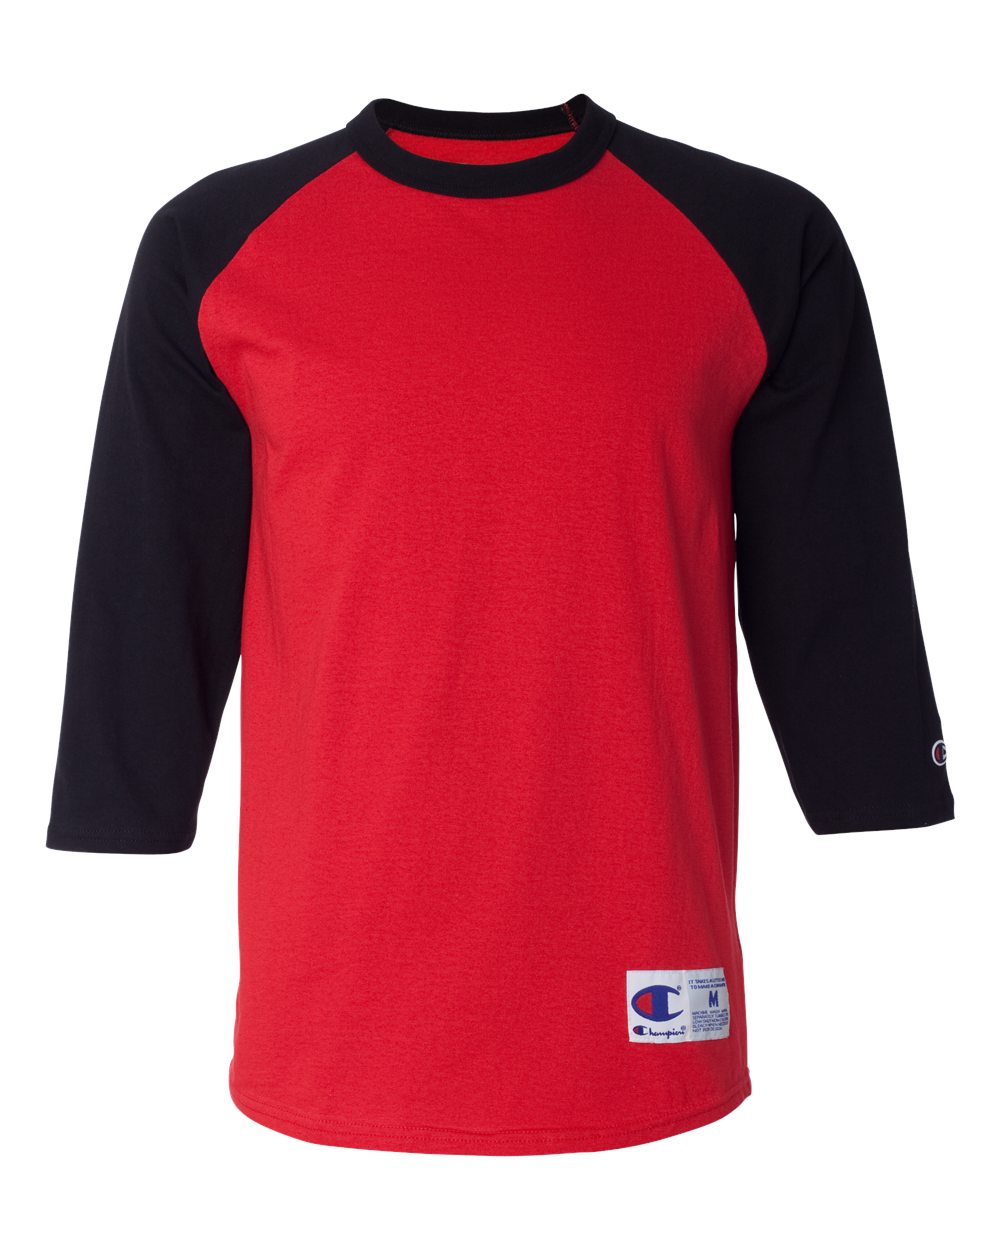 black and red baseball shirt